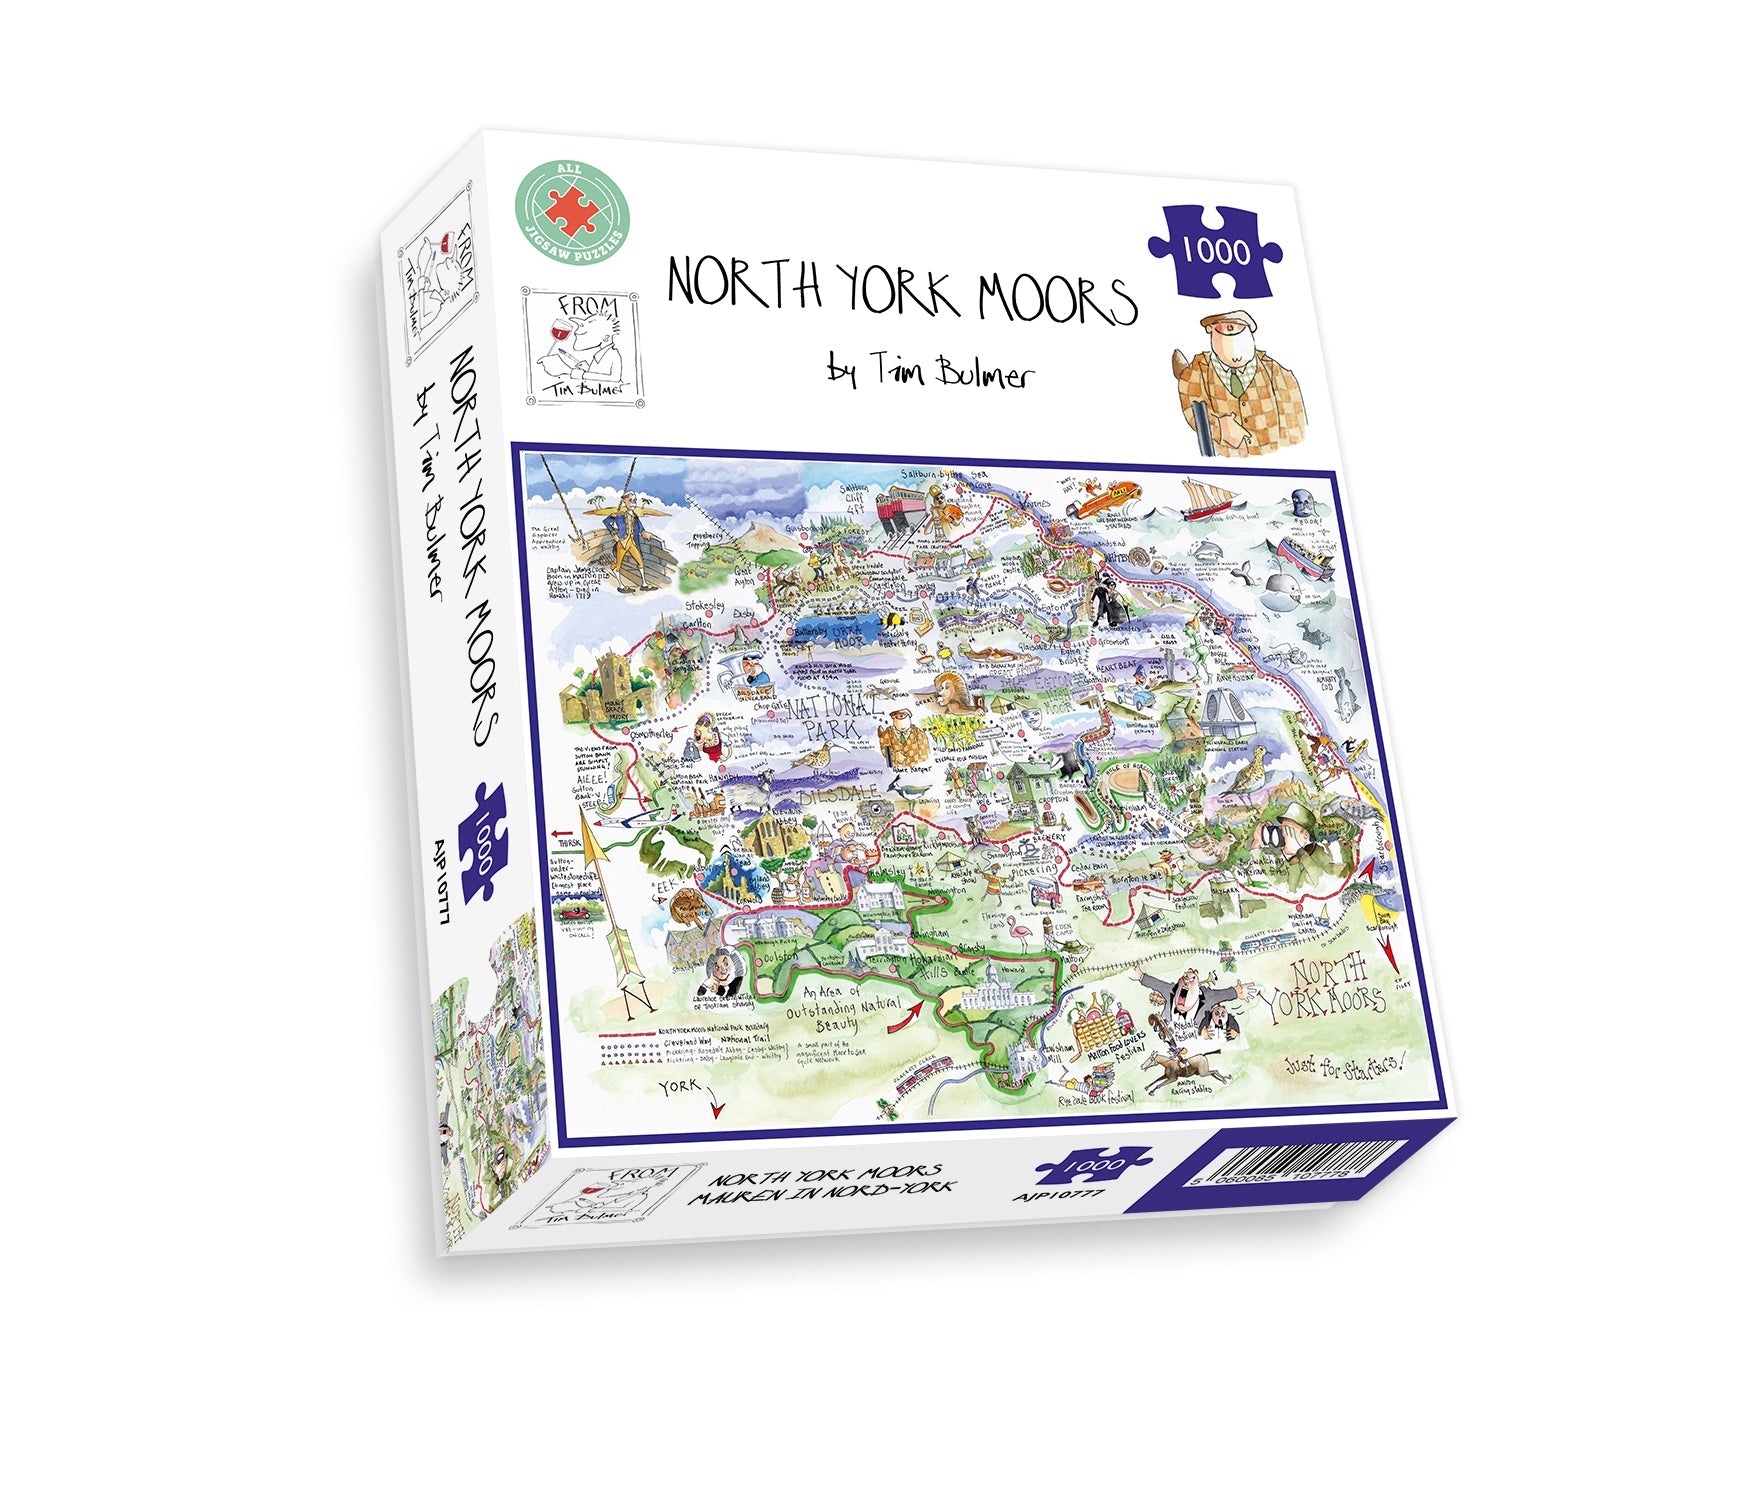 North York Moors - Tim Bulmer 1000 Piece Jigsaw Puzzle box